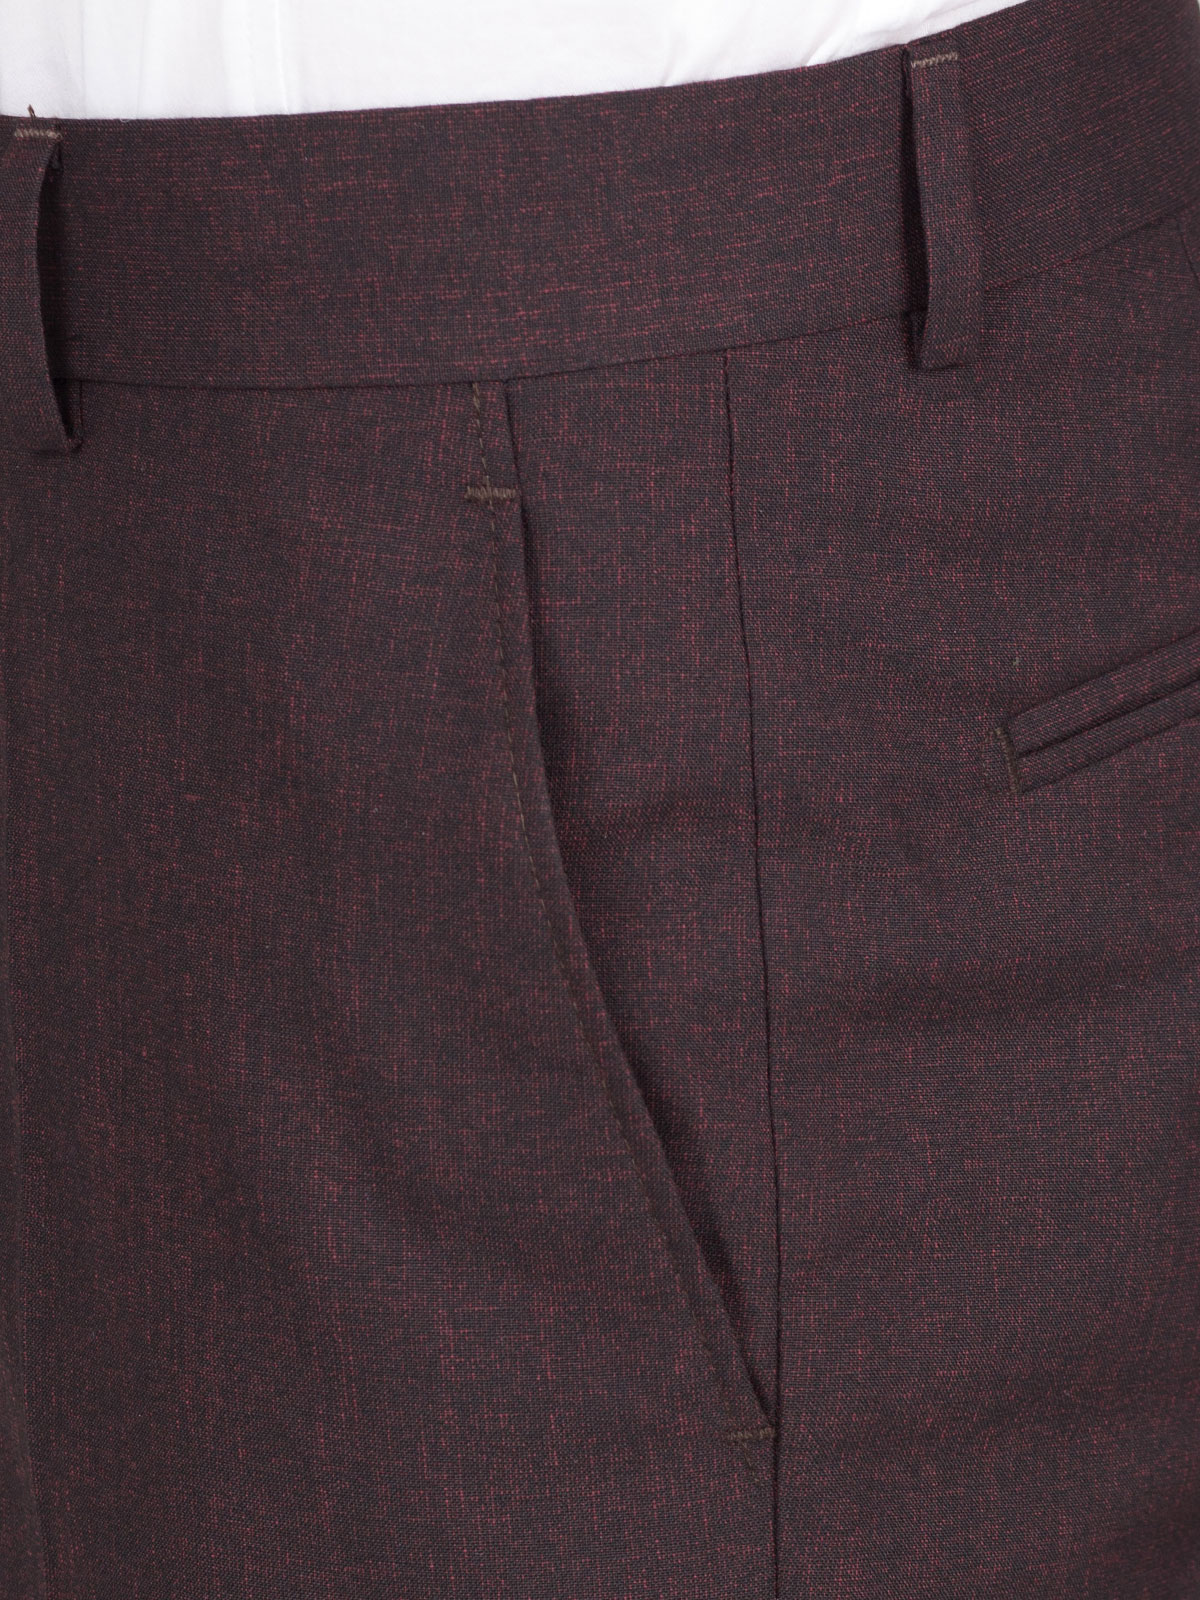 Класически втален панталон бордо меланж - 63253 55.00 лв img2